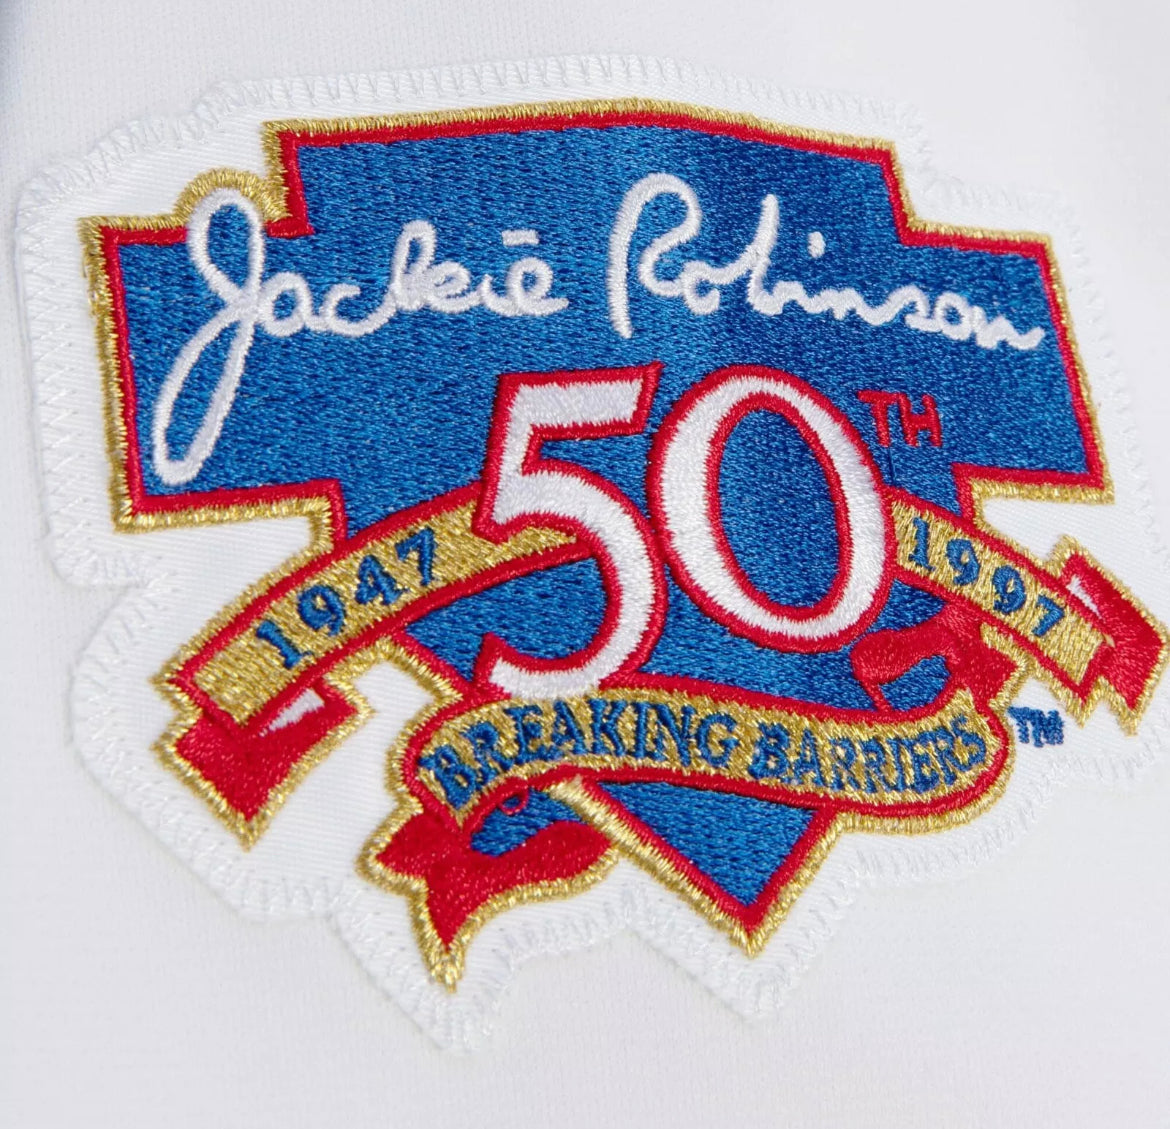 Nike Men's New York Yankees Jackie Robinson #42 Gray Cool Base